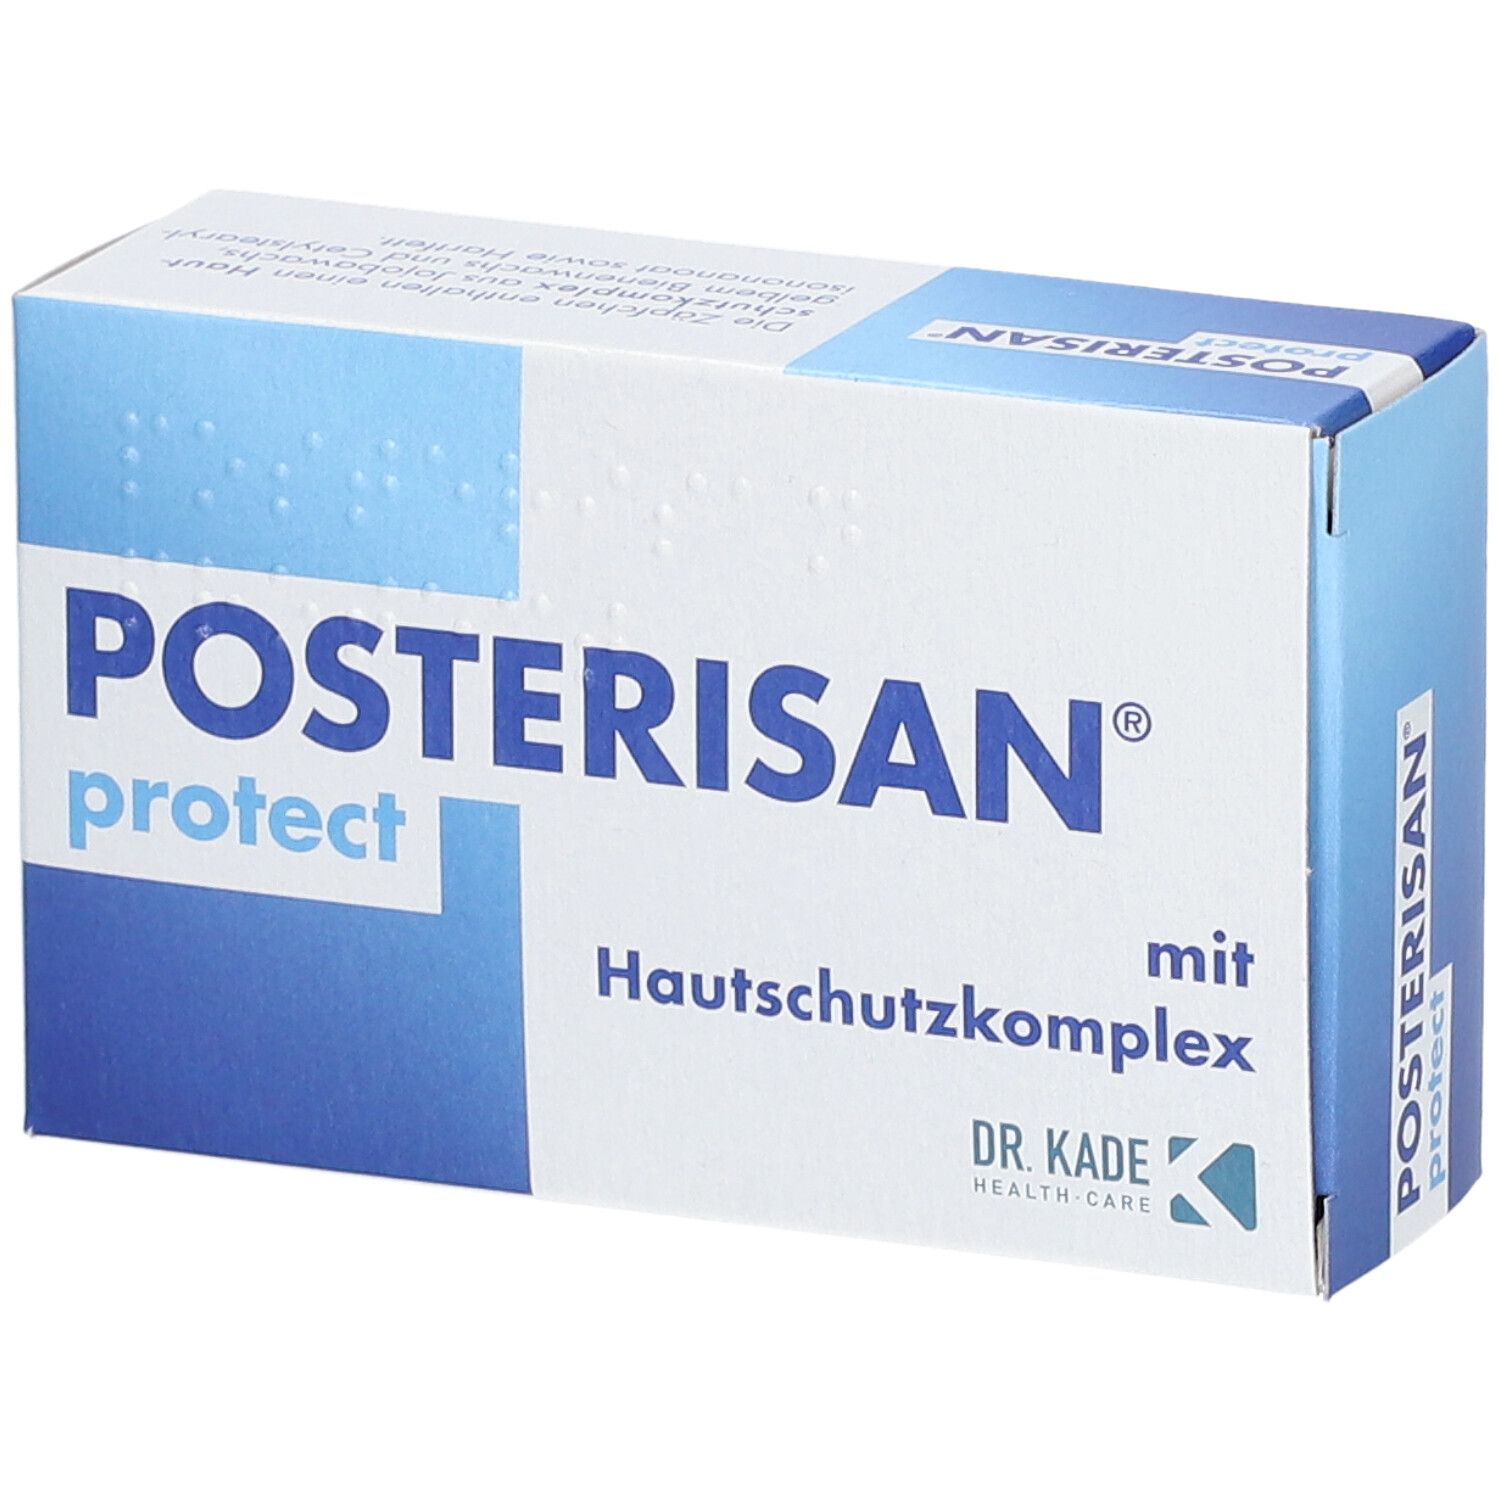 Posterisan® protect Zäpfchen